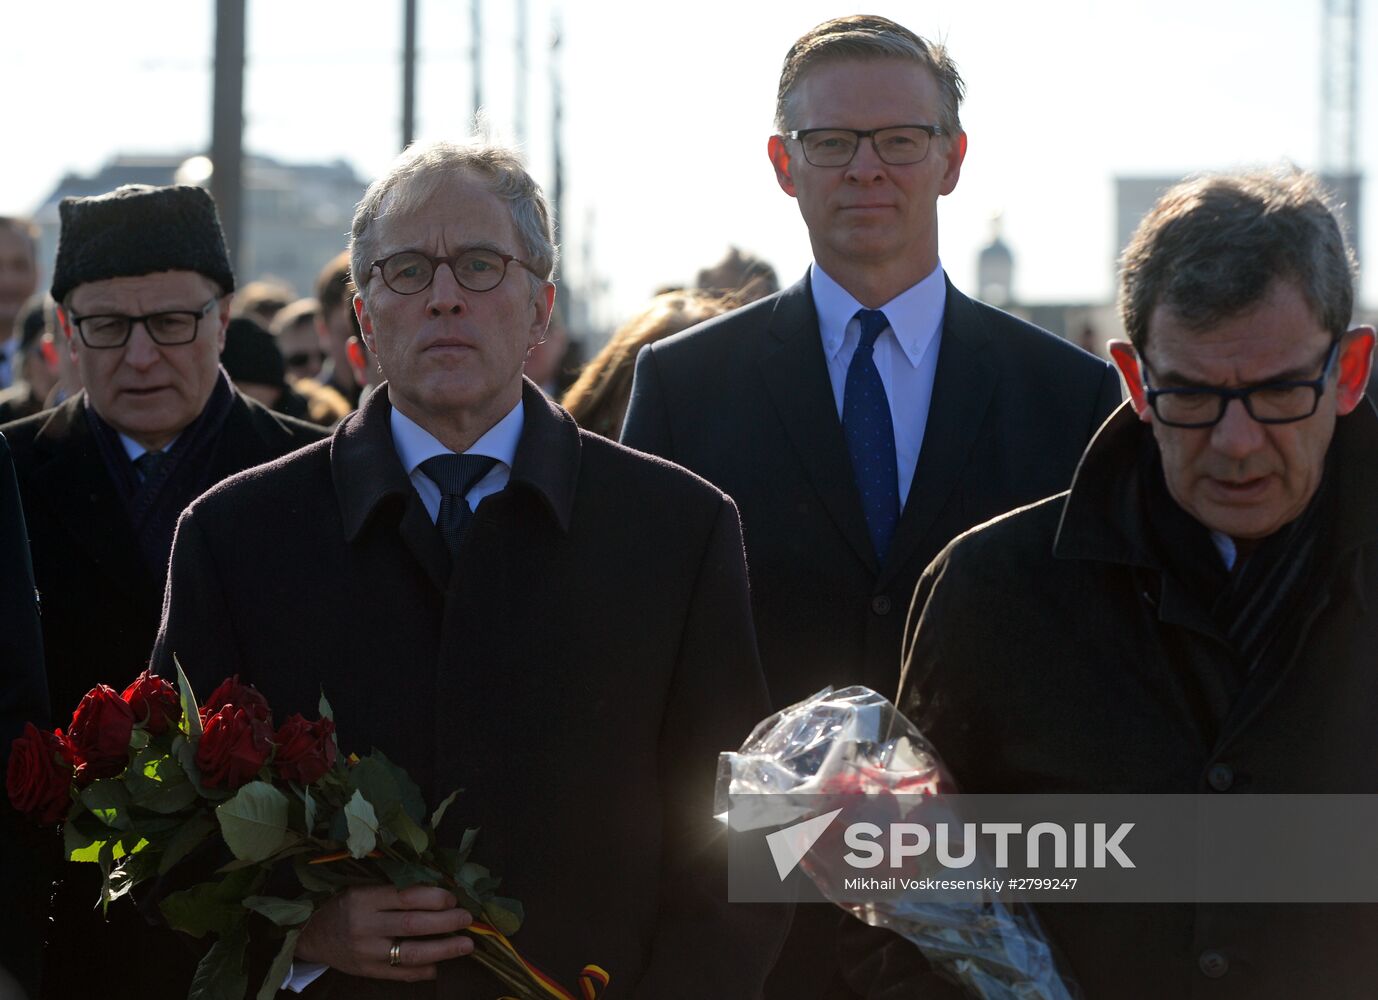 Ambassadors of EU member states lay flowers on site of politician Boris Nemtsov's shooting